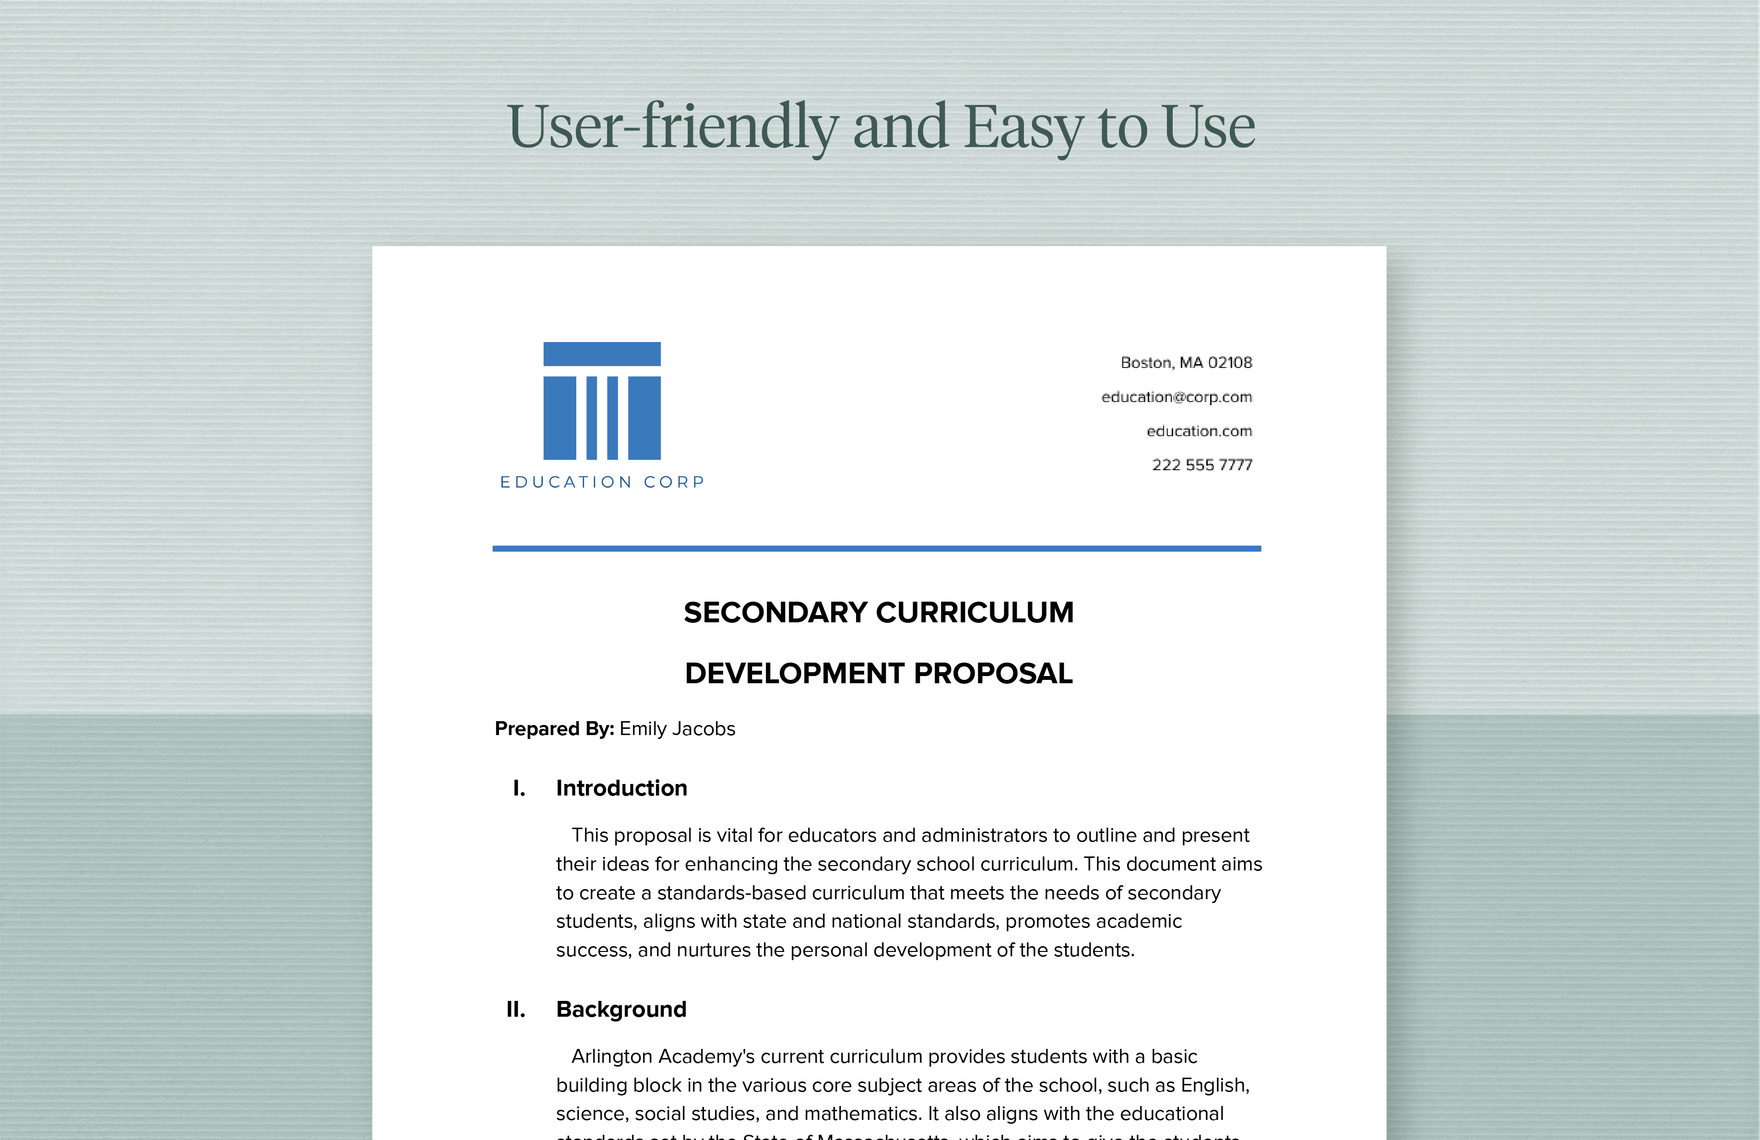 Secondary Curriculum Development Proposal Form